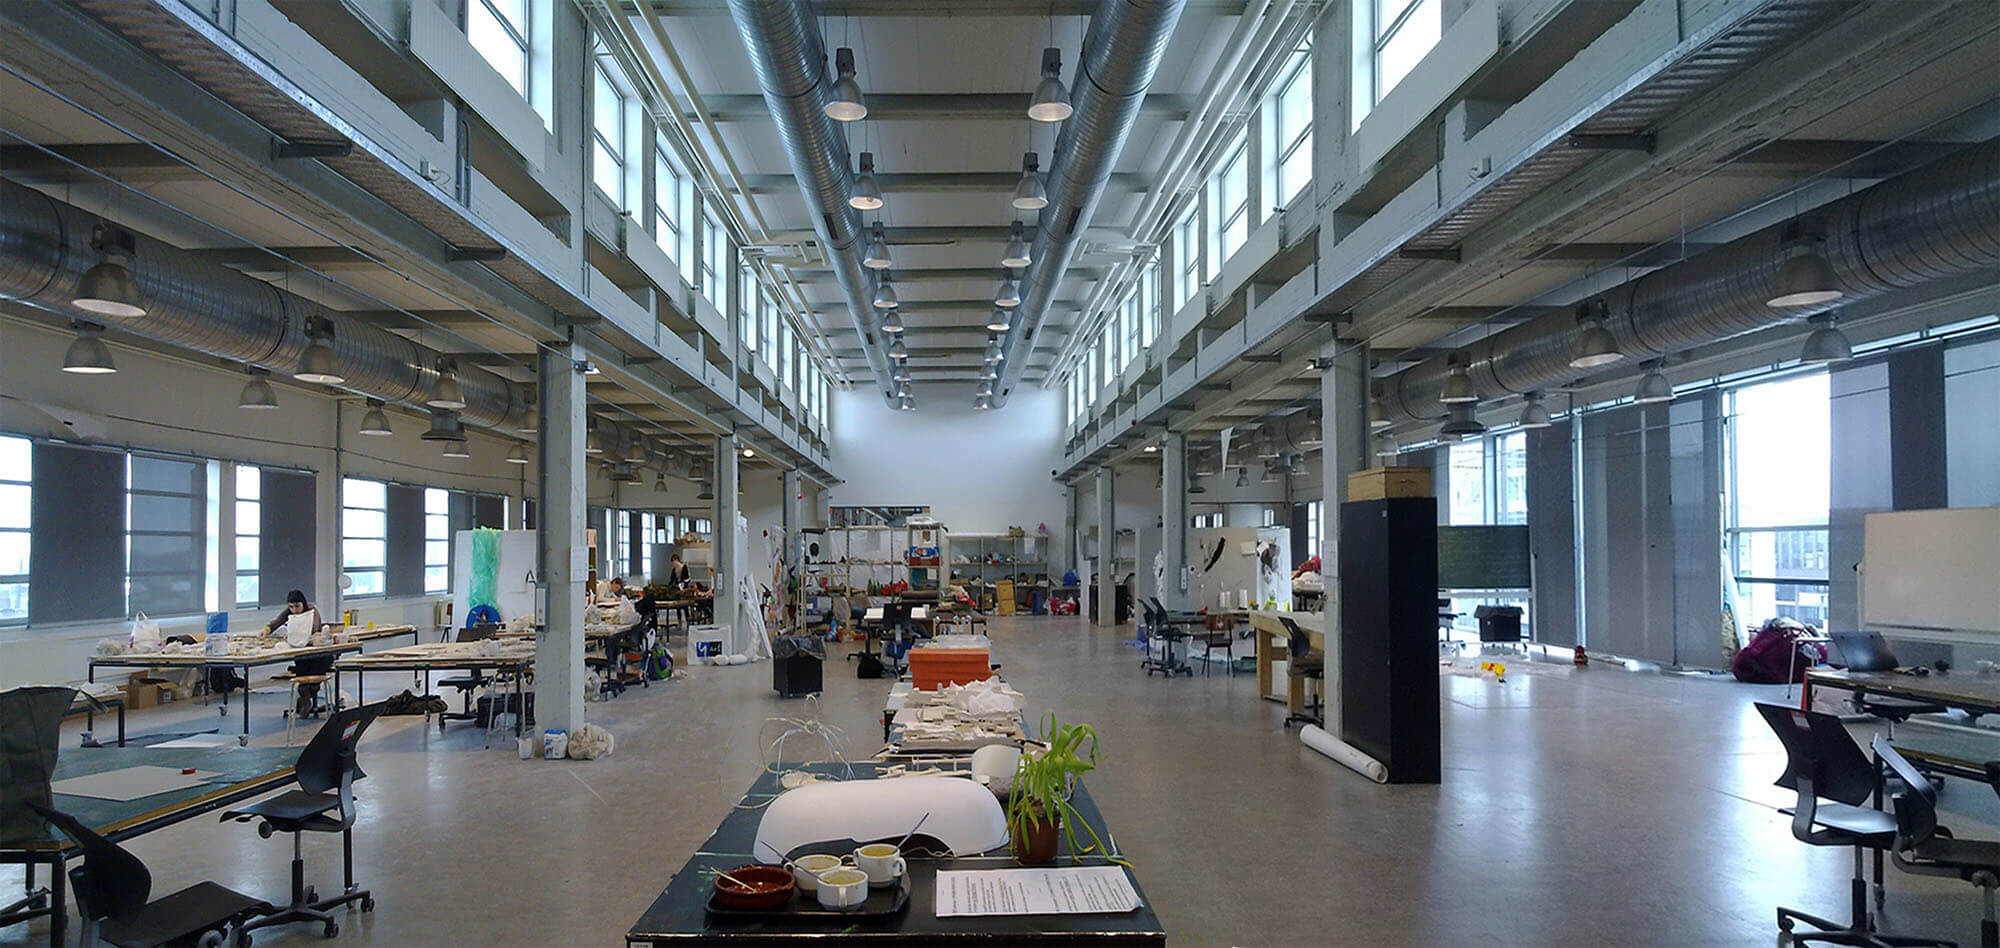 Studio space at Design Academy Eindhoven